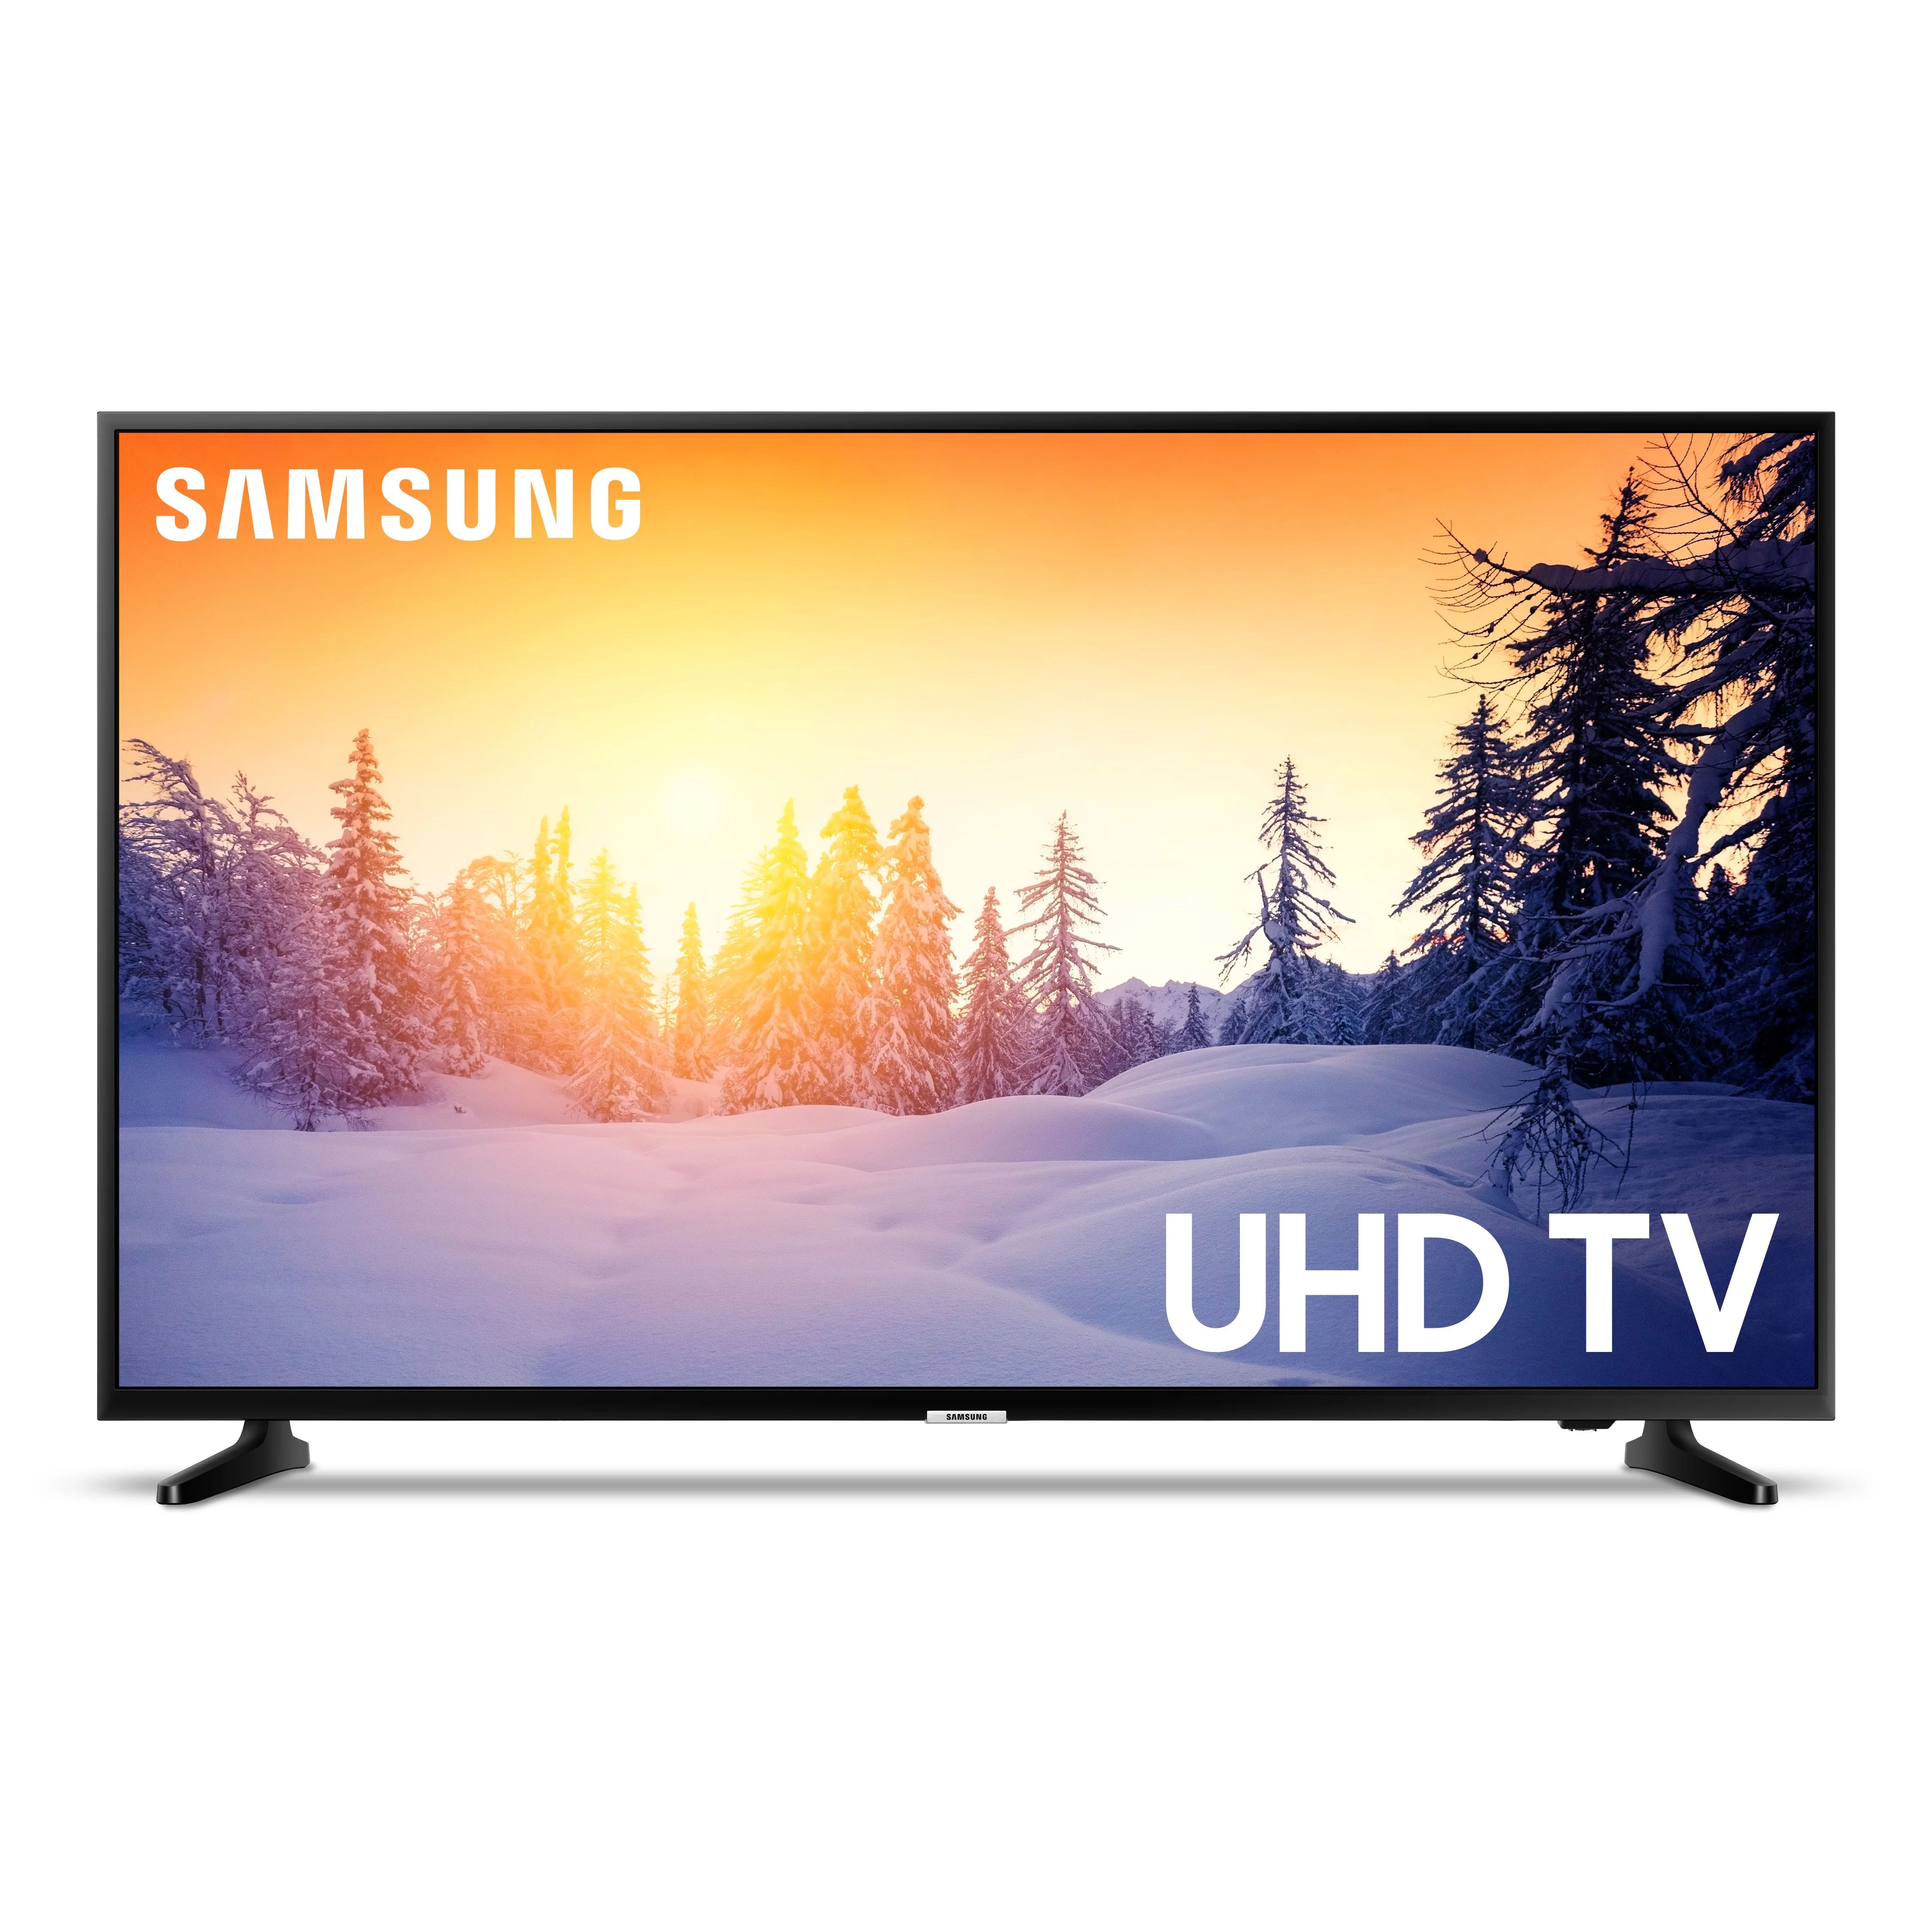 SAMSUNG 65" Class 4K UHD 2160p LED Smart TV with HDR UN65NU6900 | Walmart (US)